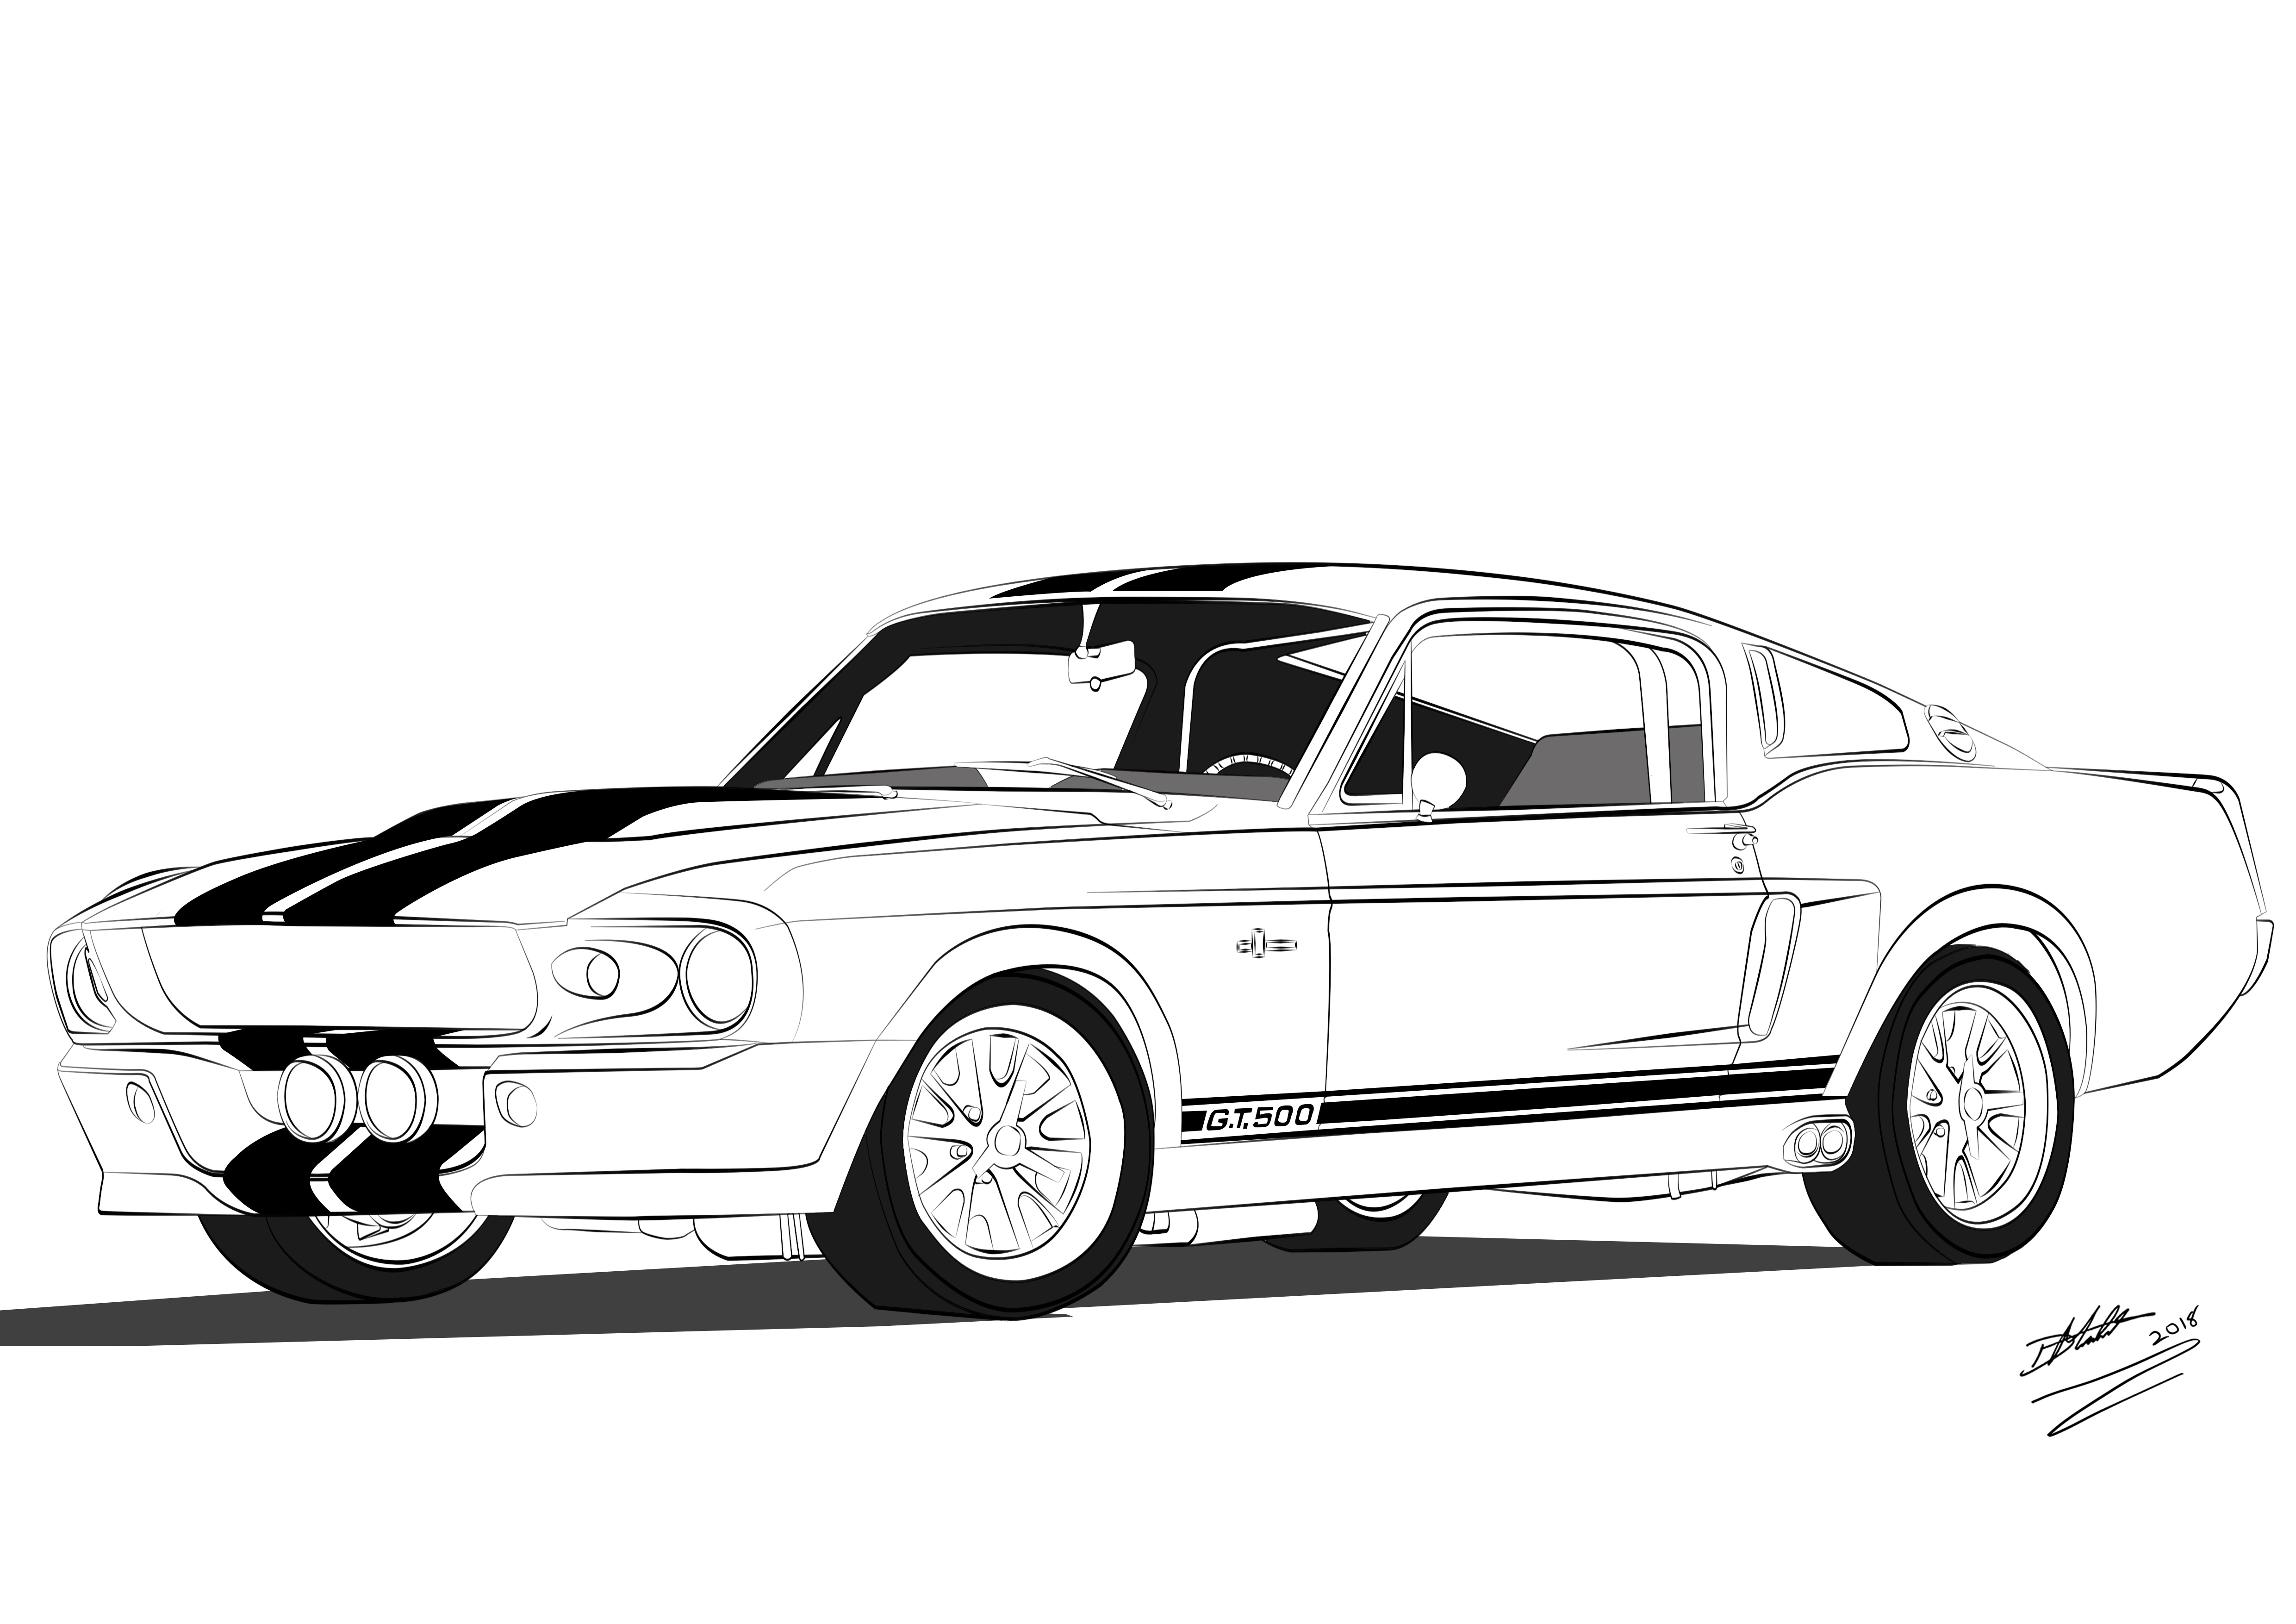 Раскраска Ford Mustang